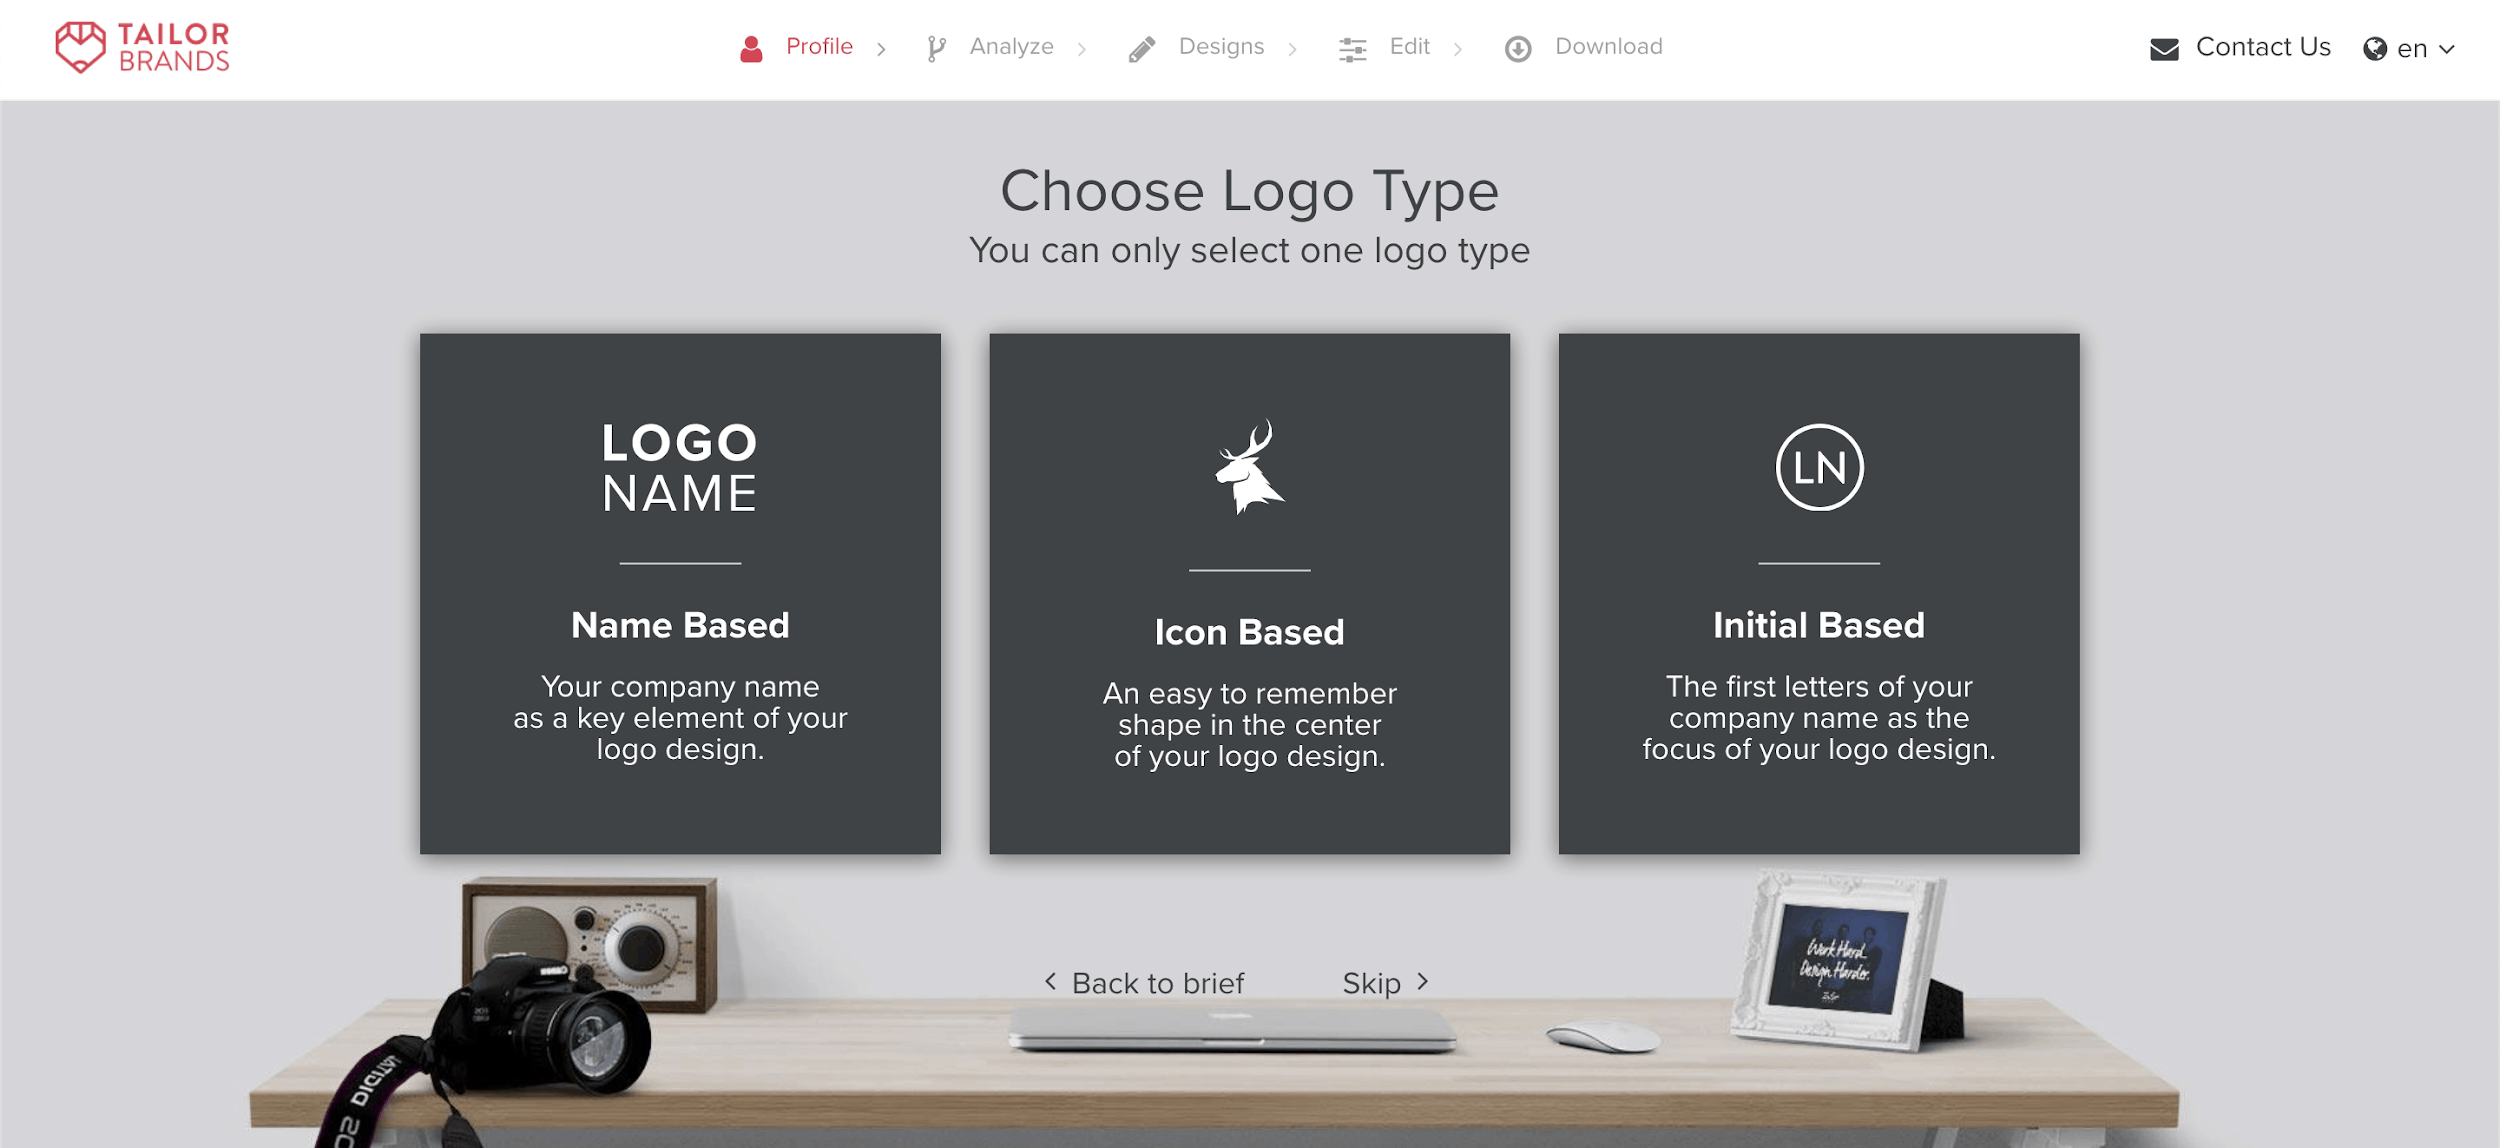 Tailor Brands screenshot - choose logo type